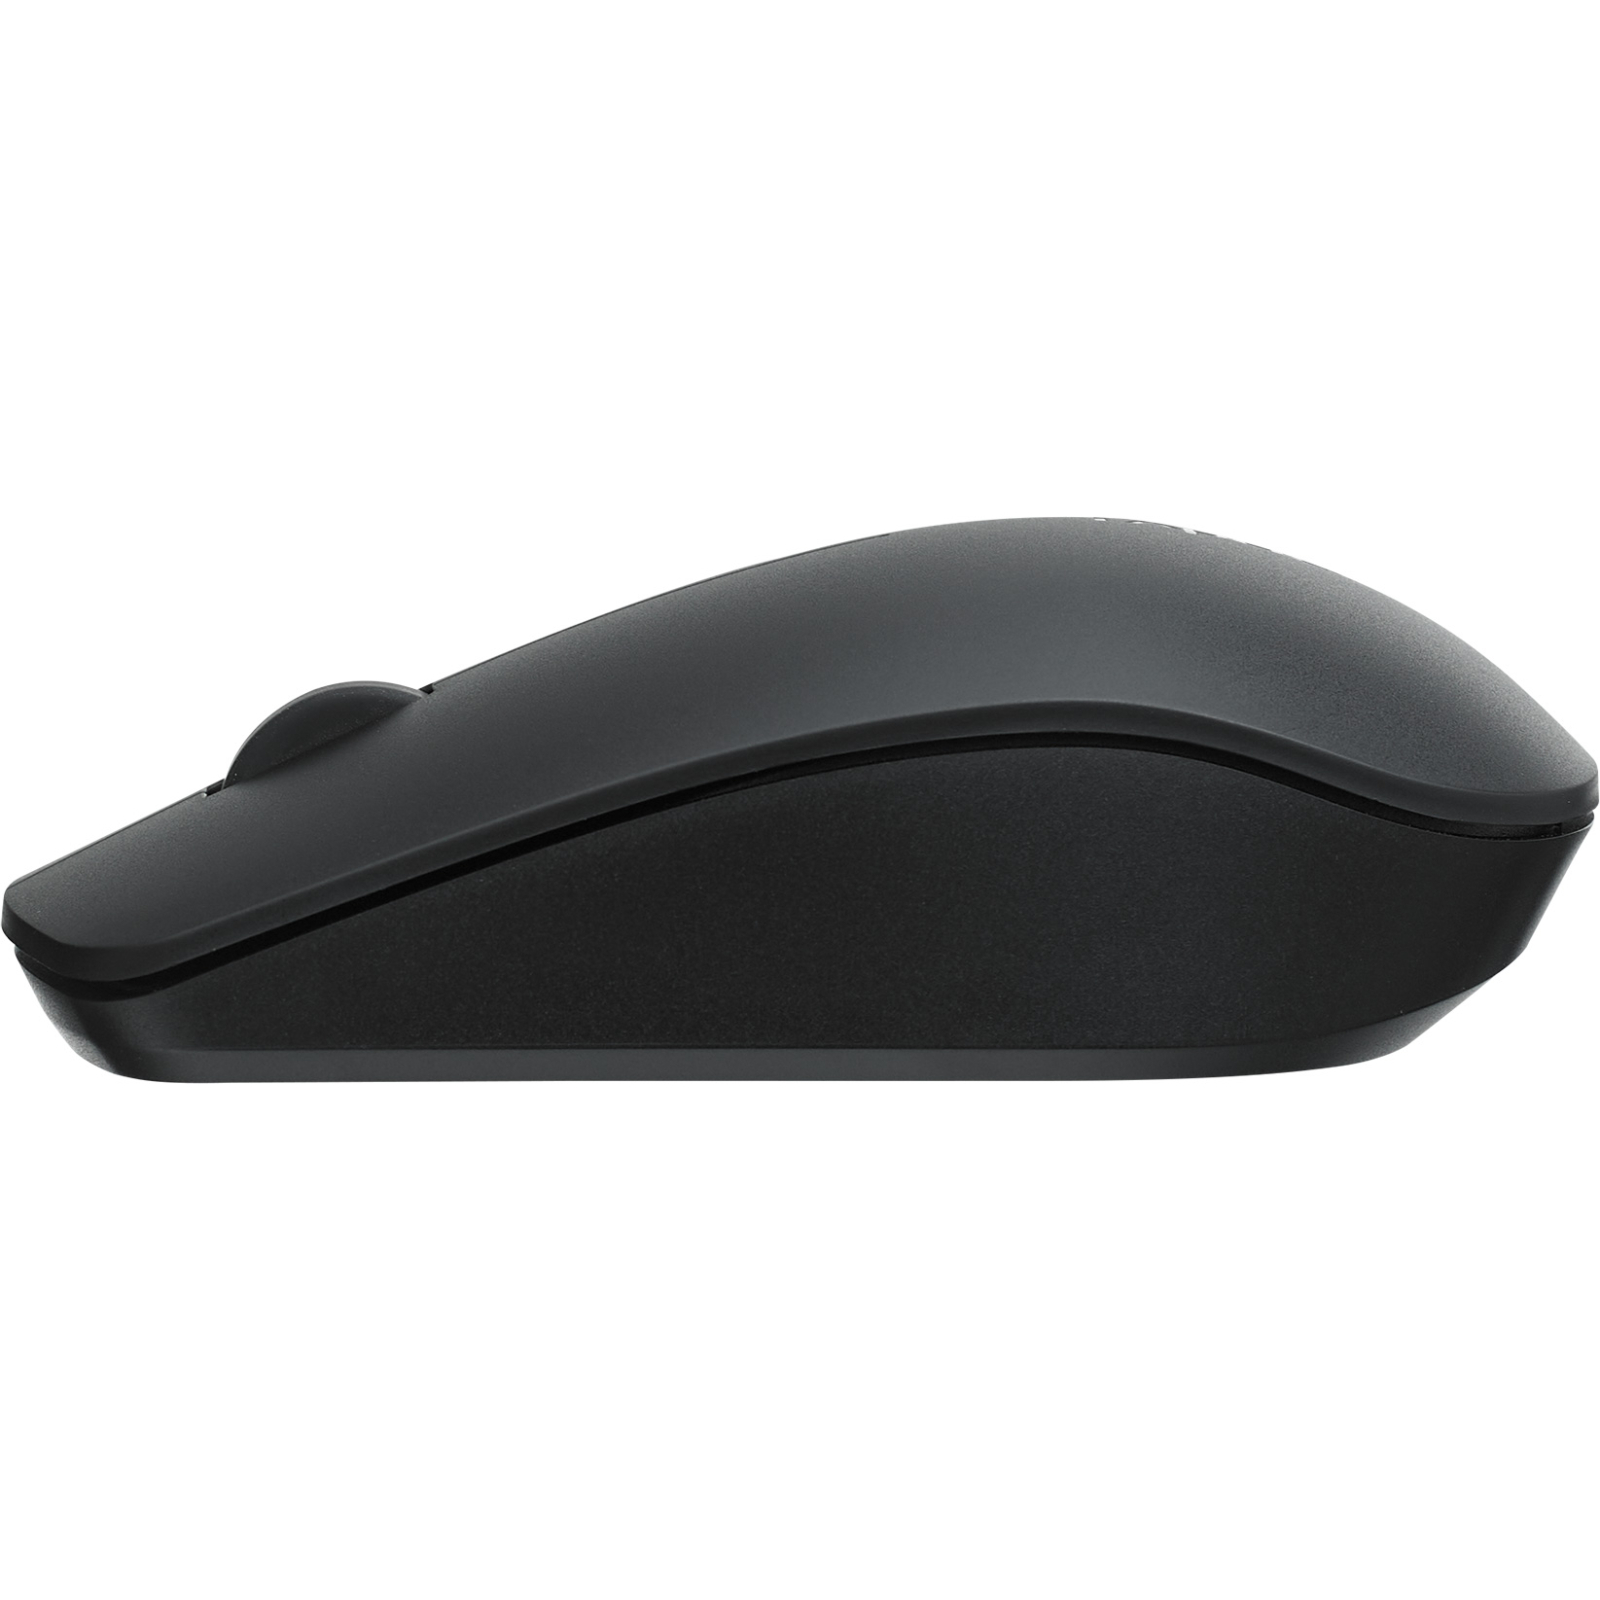 Мышка Rapoo M20 Plus Wireless Black (M20 Plus Black) изображение 3